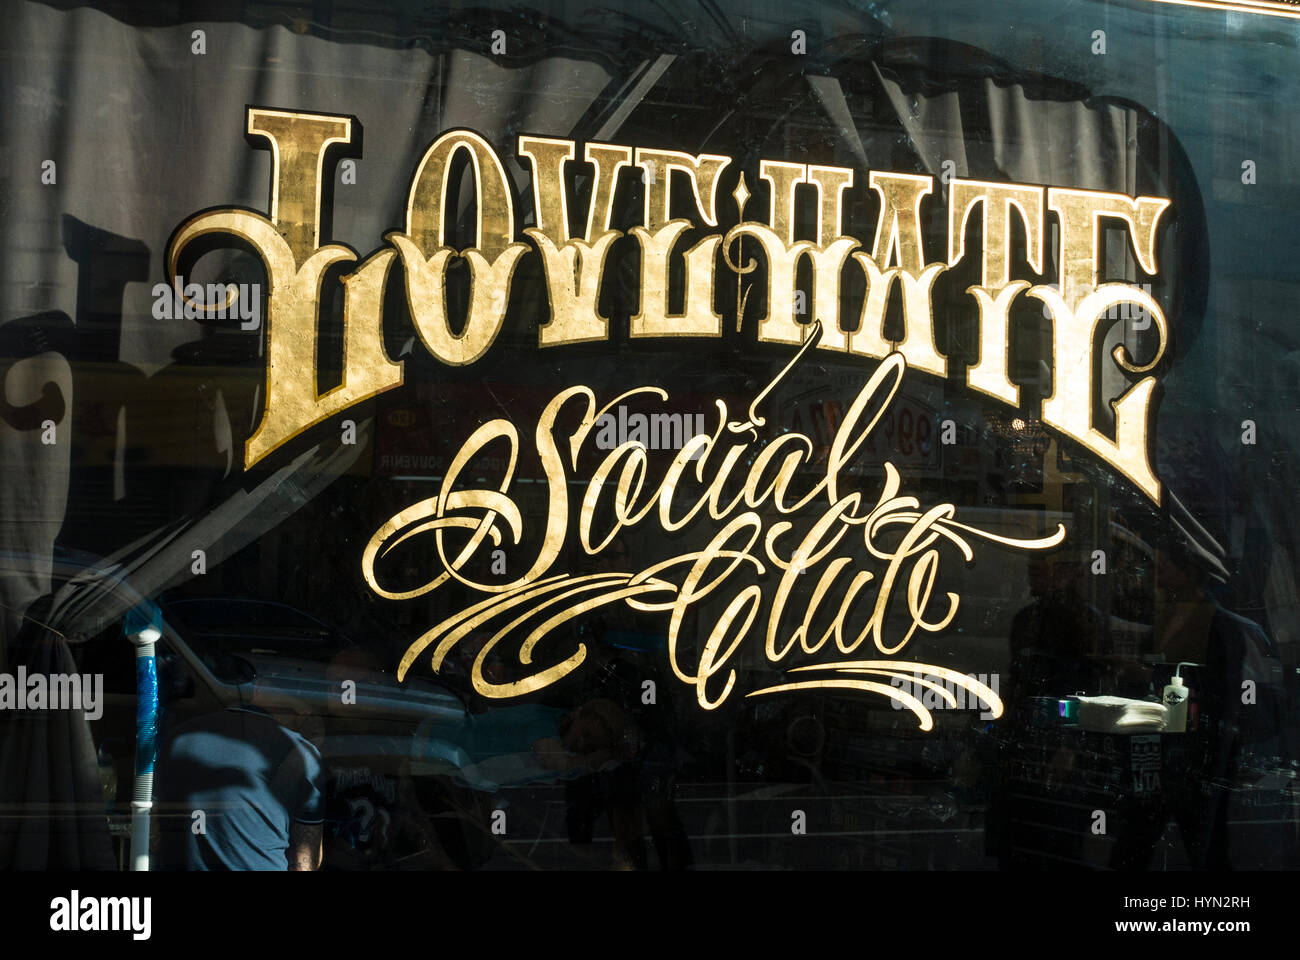 Love Hate Social Club, a tattoo parlor in Lower Manhattan Stock Photo